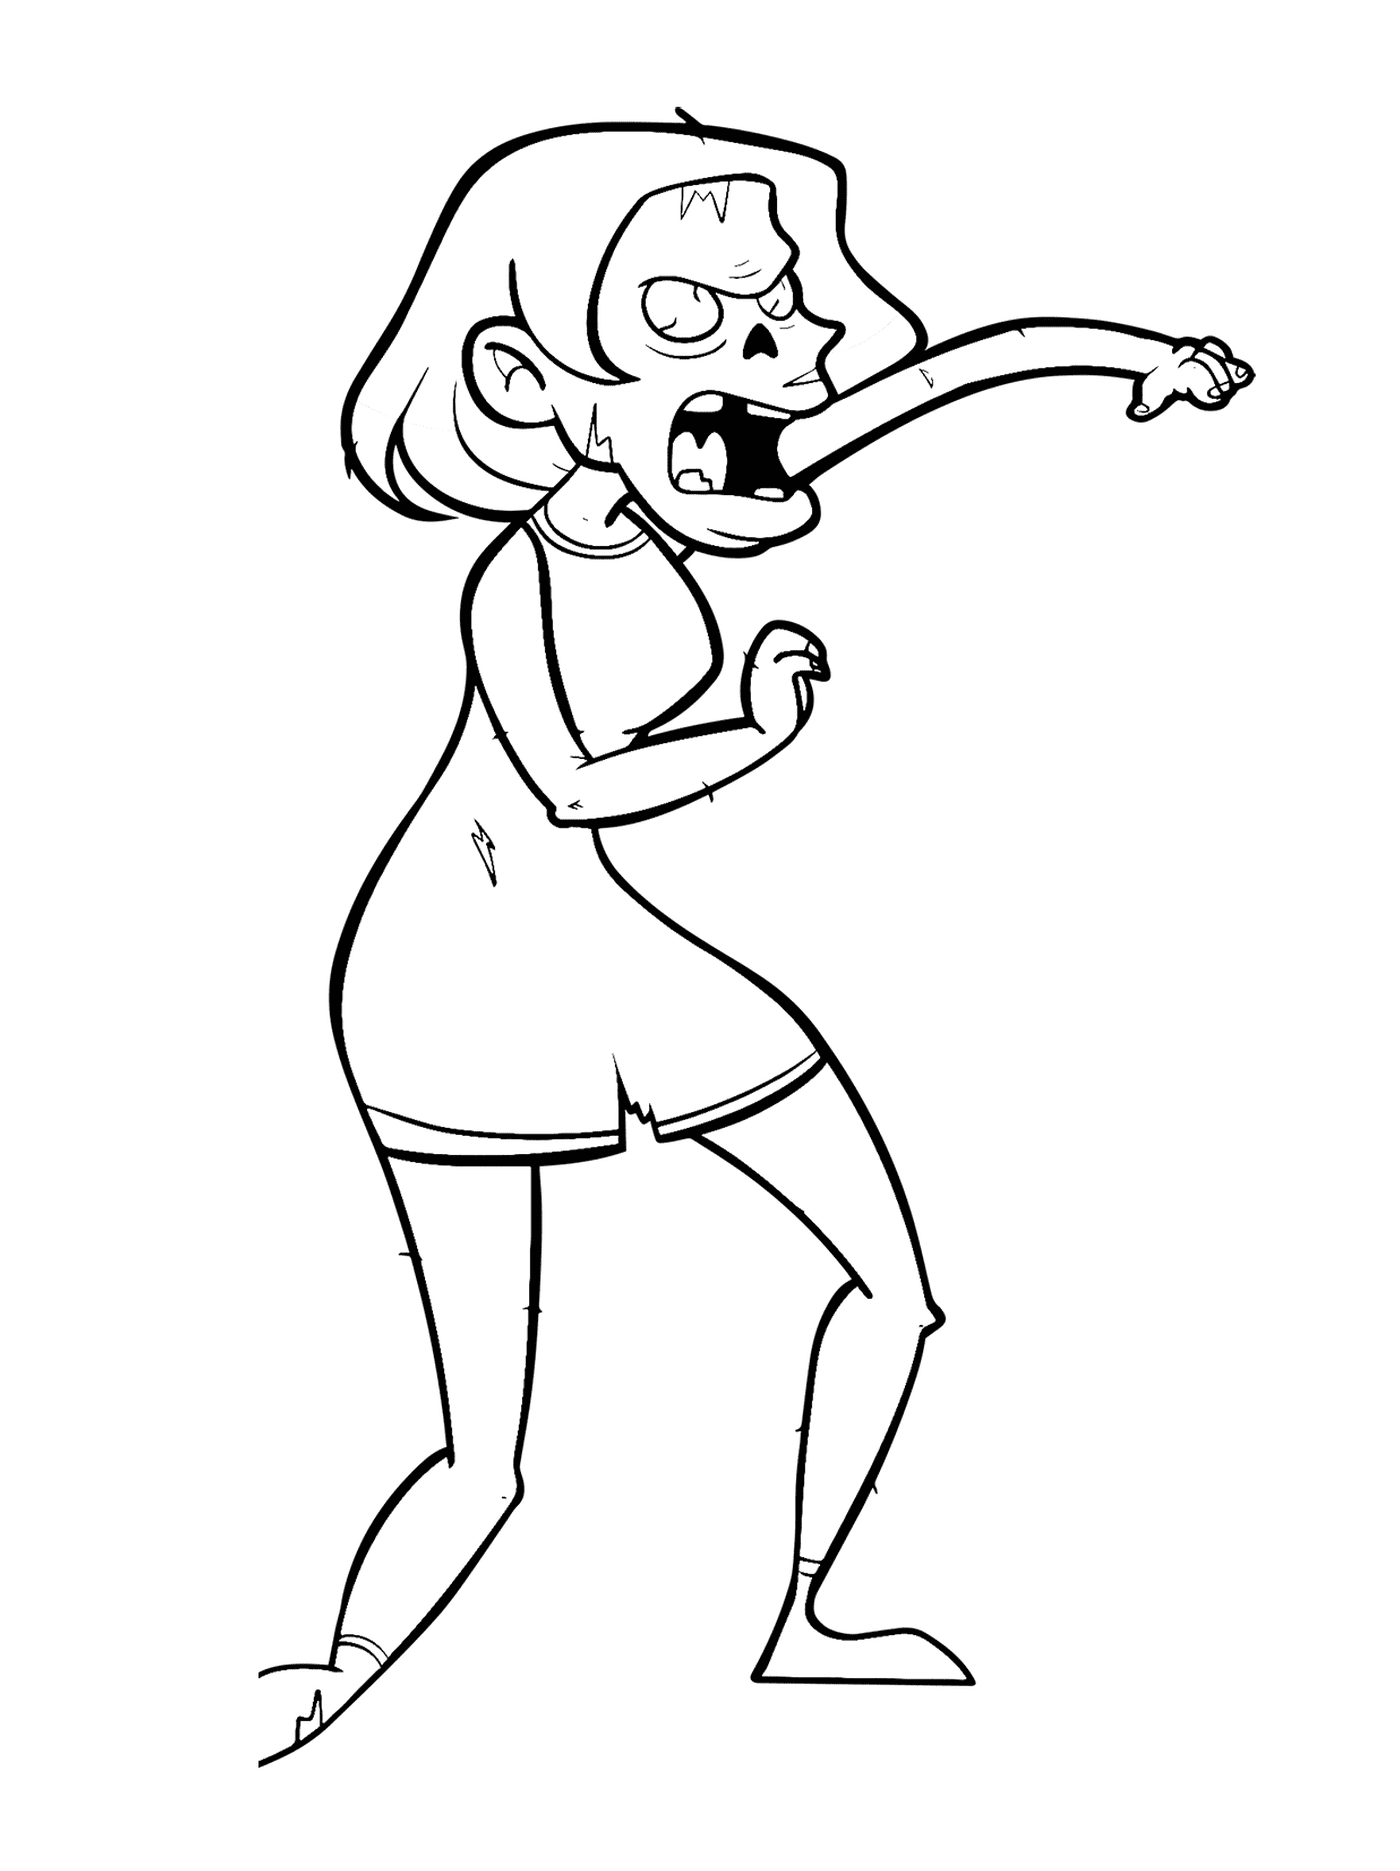  Eine wütende Zombie-Frau 